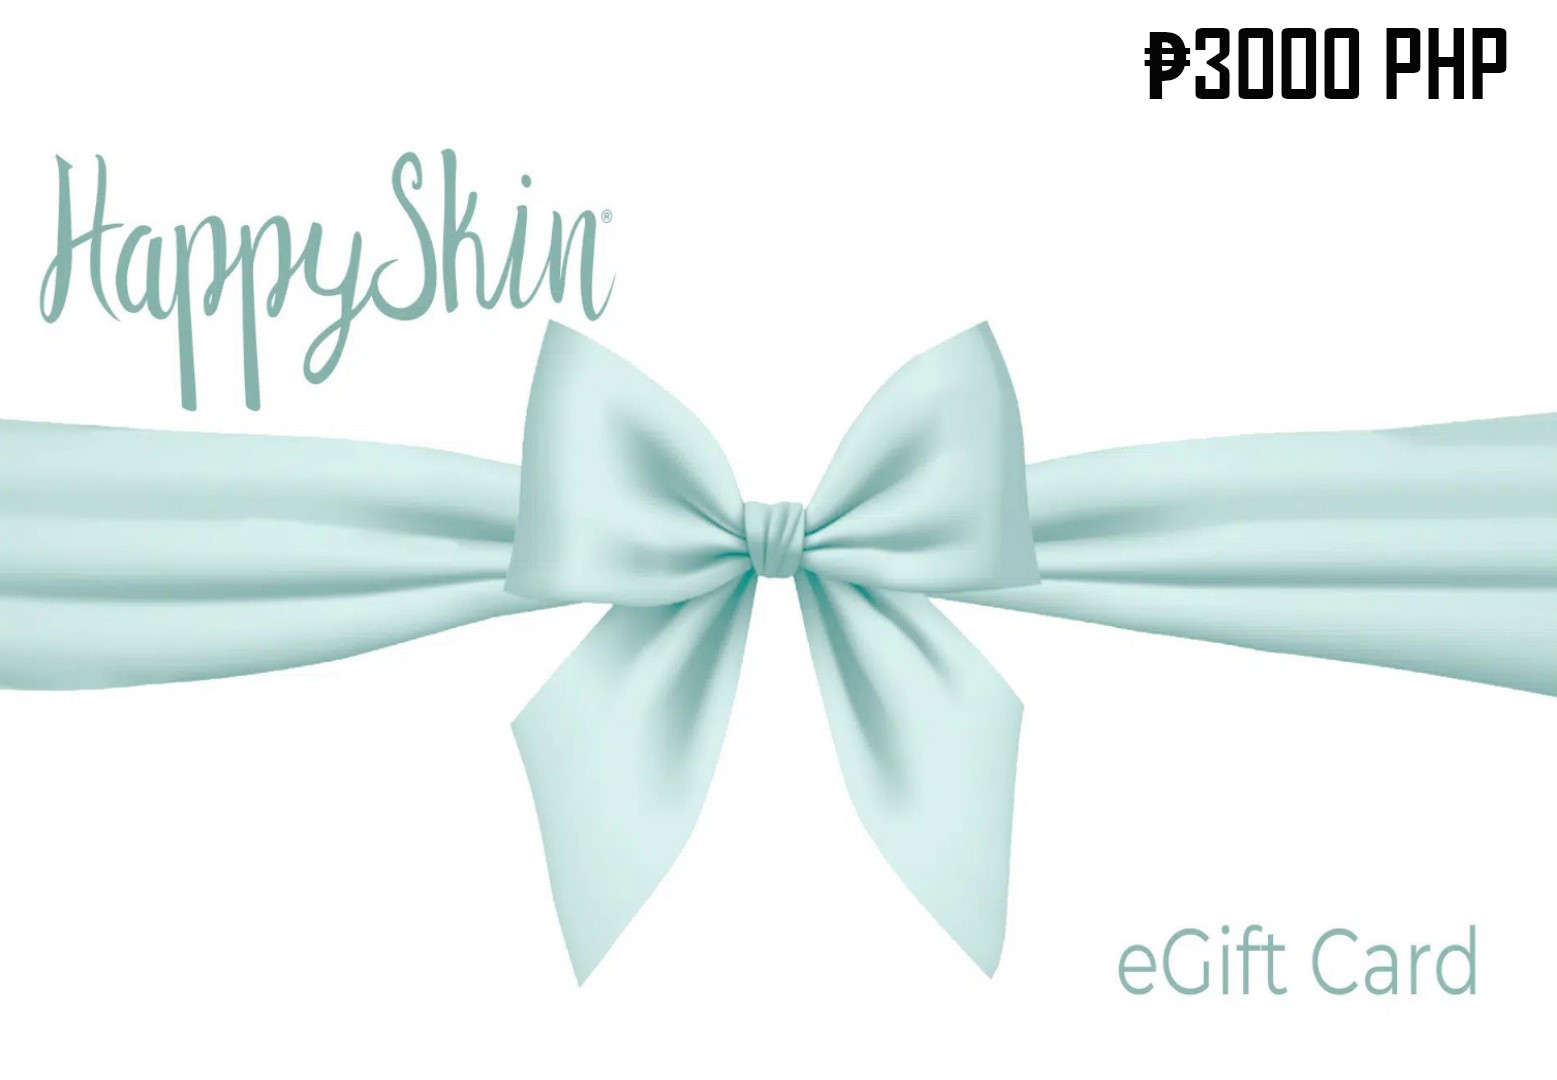 (62.52$) Happy Skin ₱3000 PH Gift Card